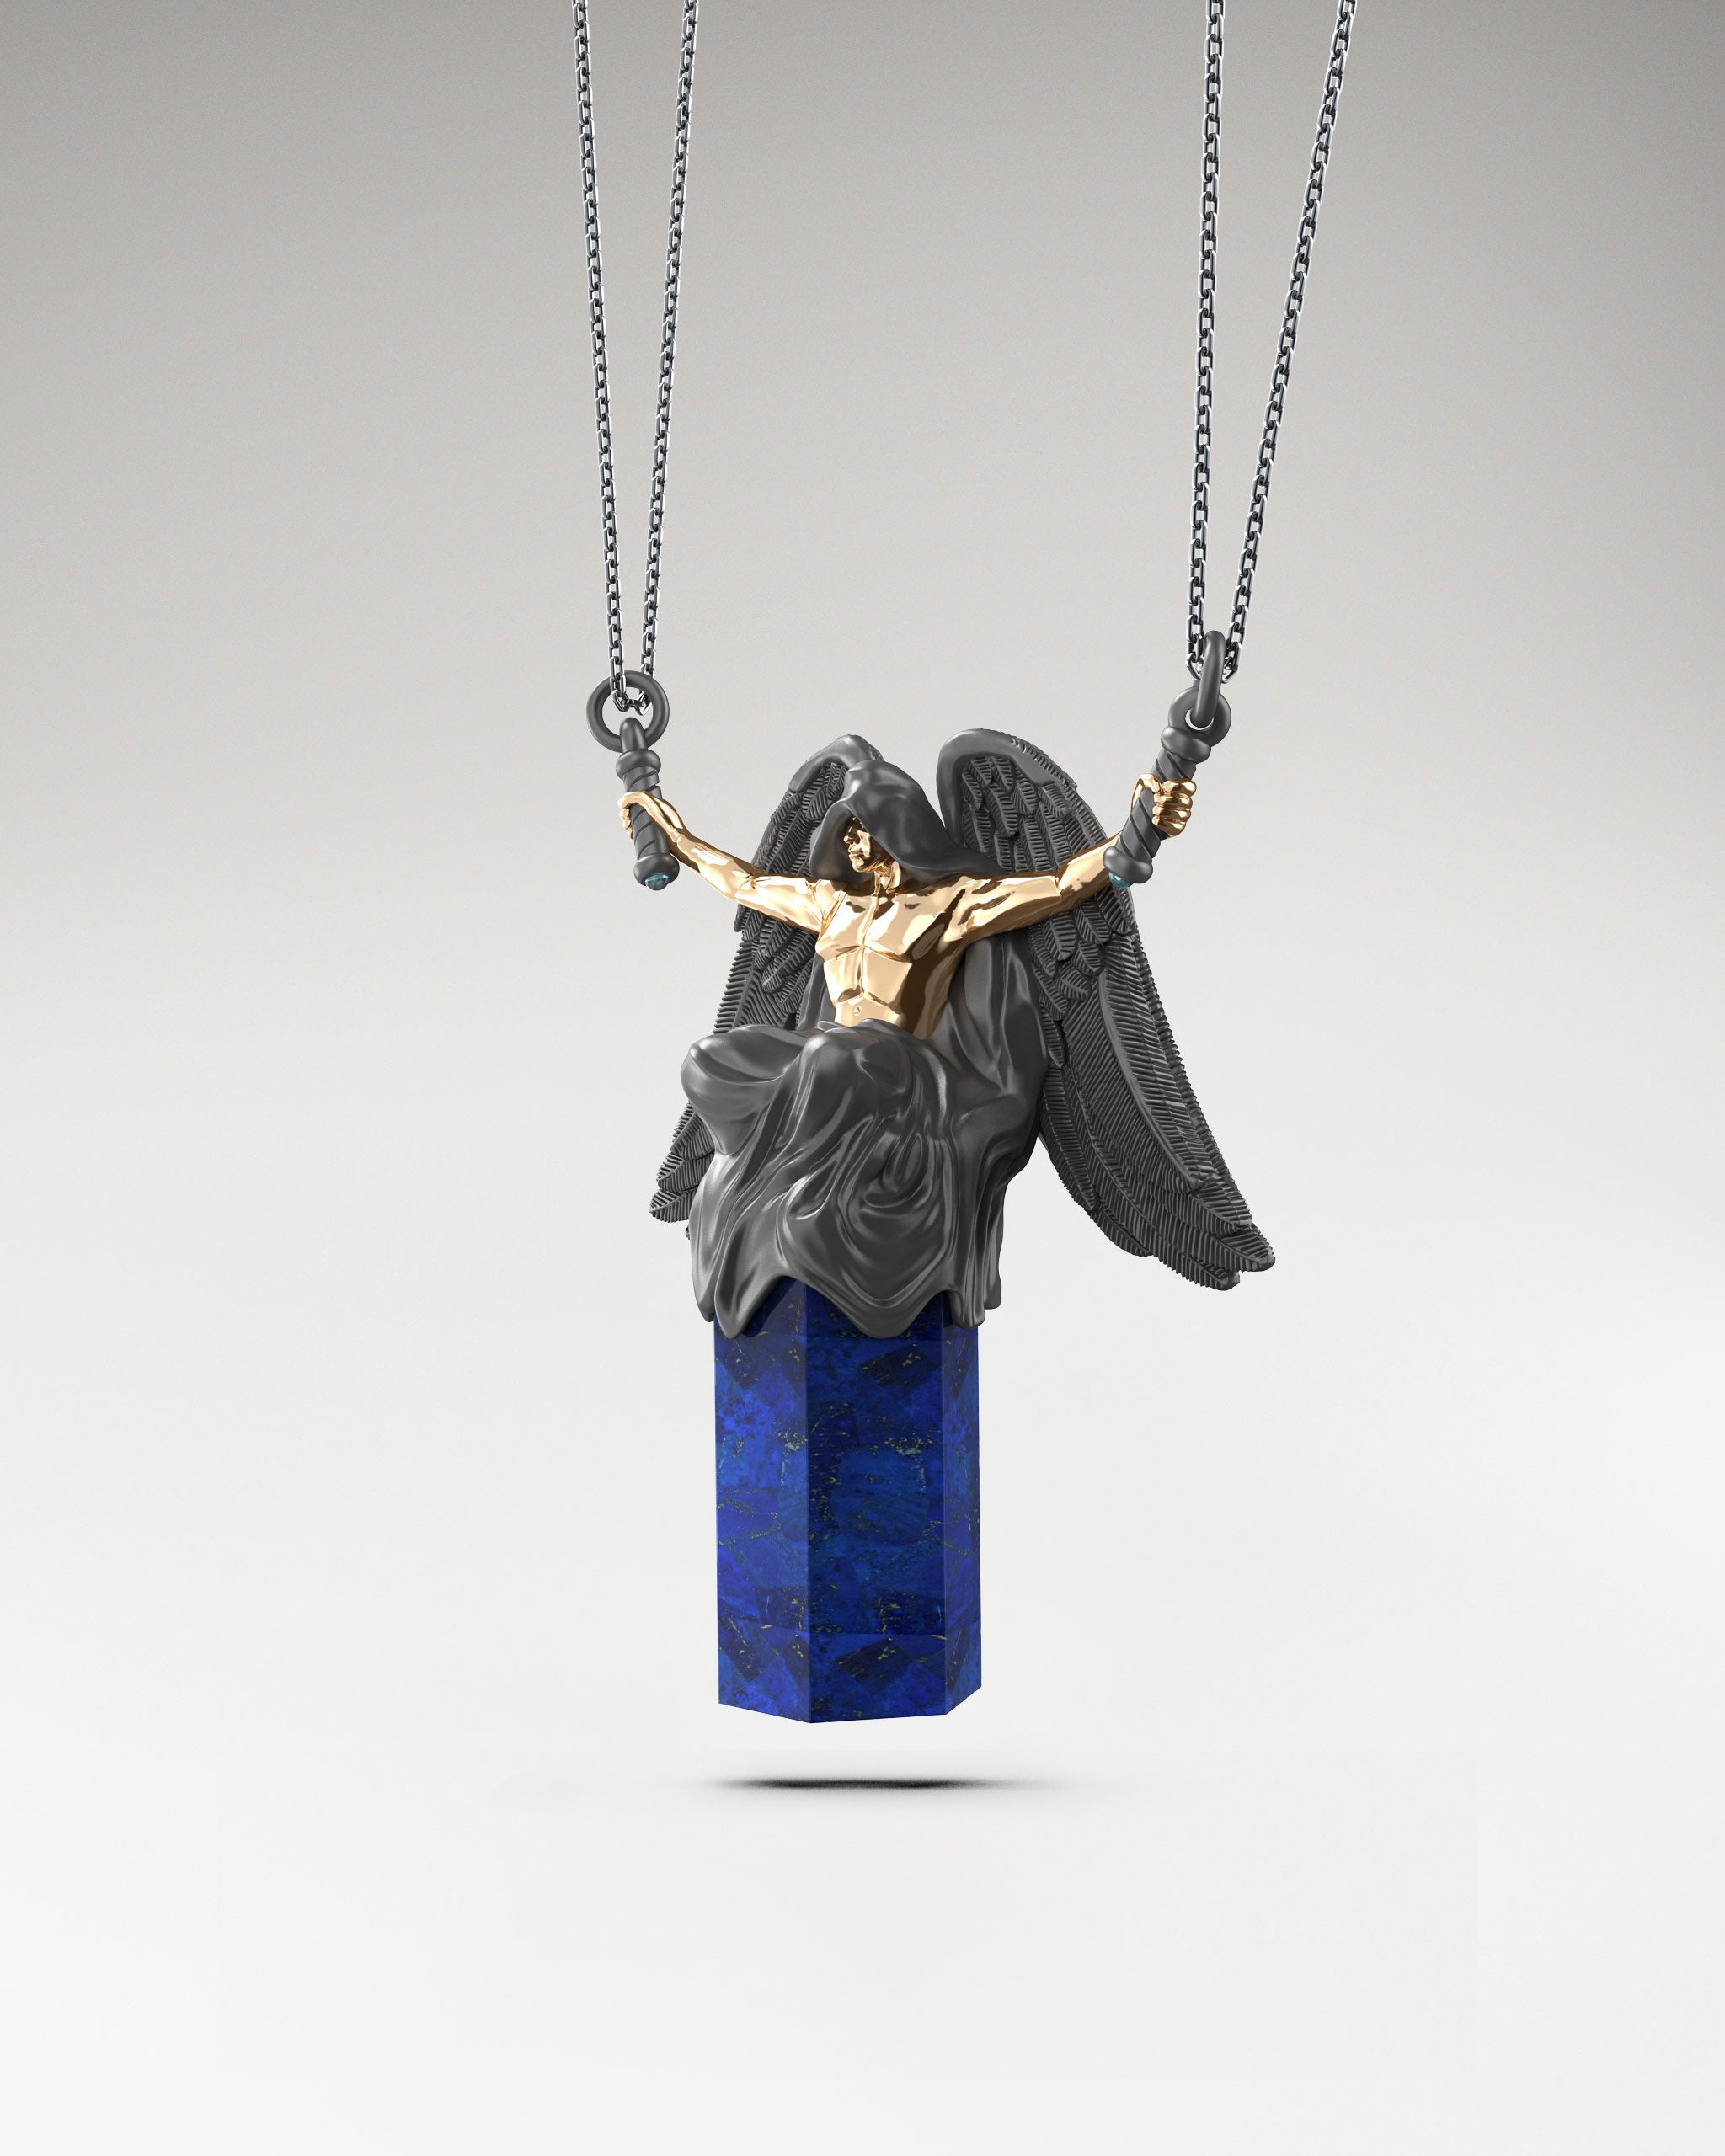 Archangel Pendant in 10k gold and Lapis Lazuli gemstone